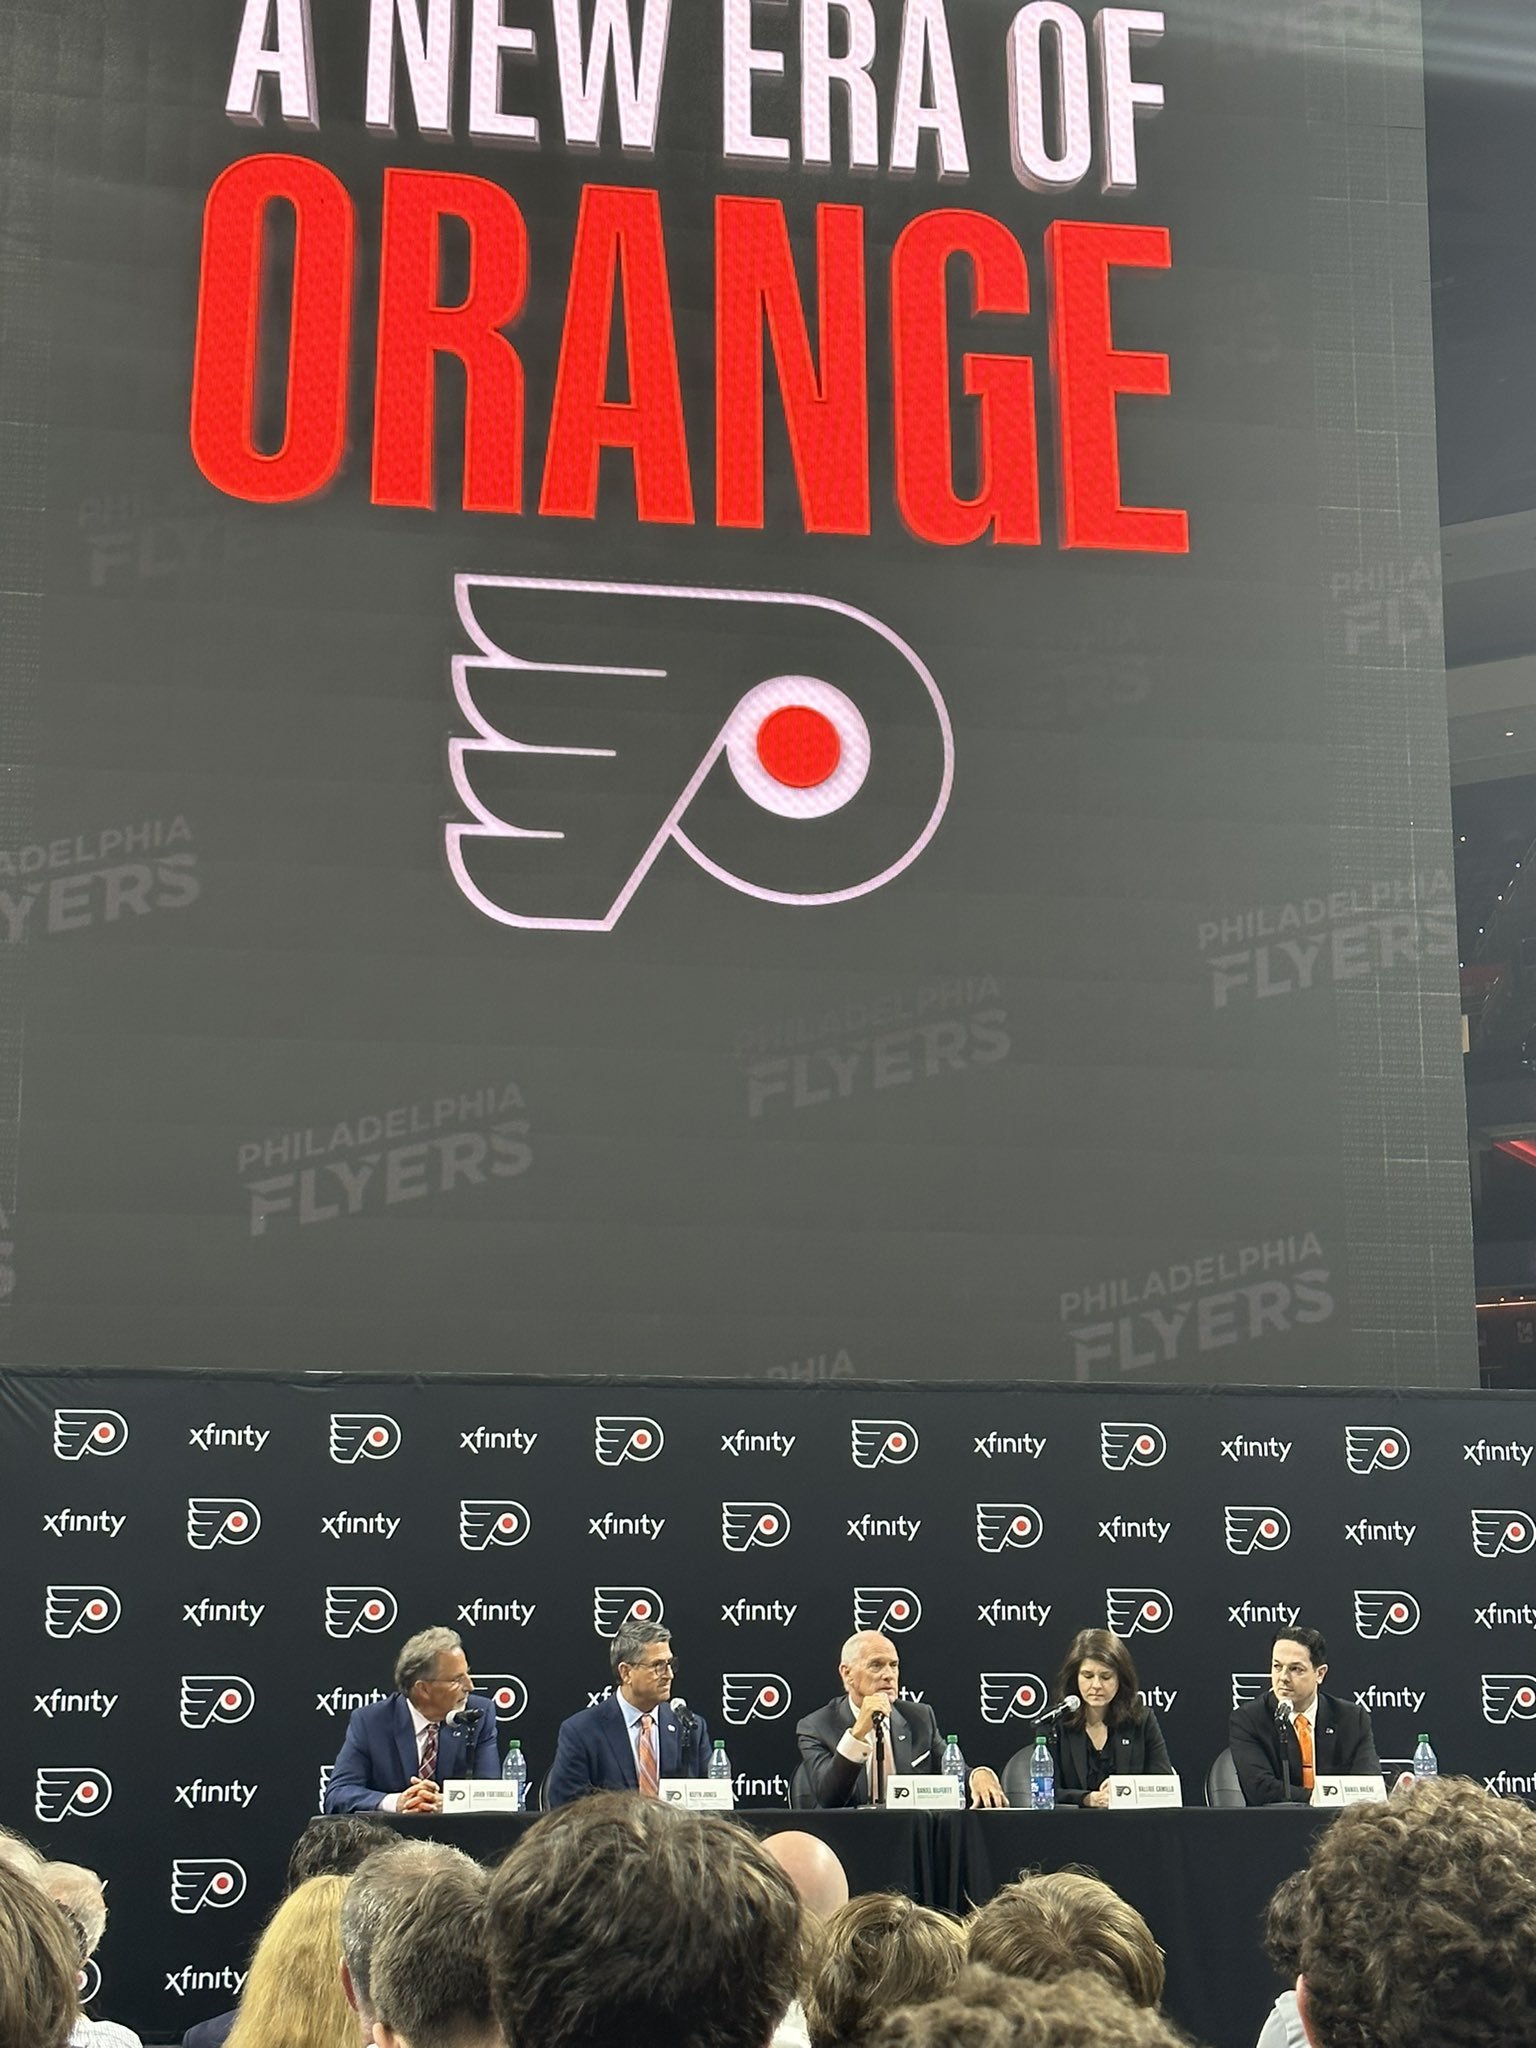 Philadelphia Flyers News & Rumors: Jones, Briere, Gauthier